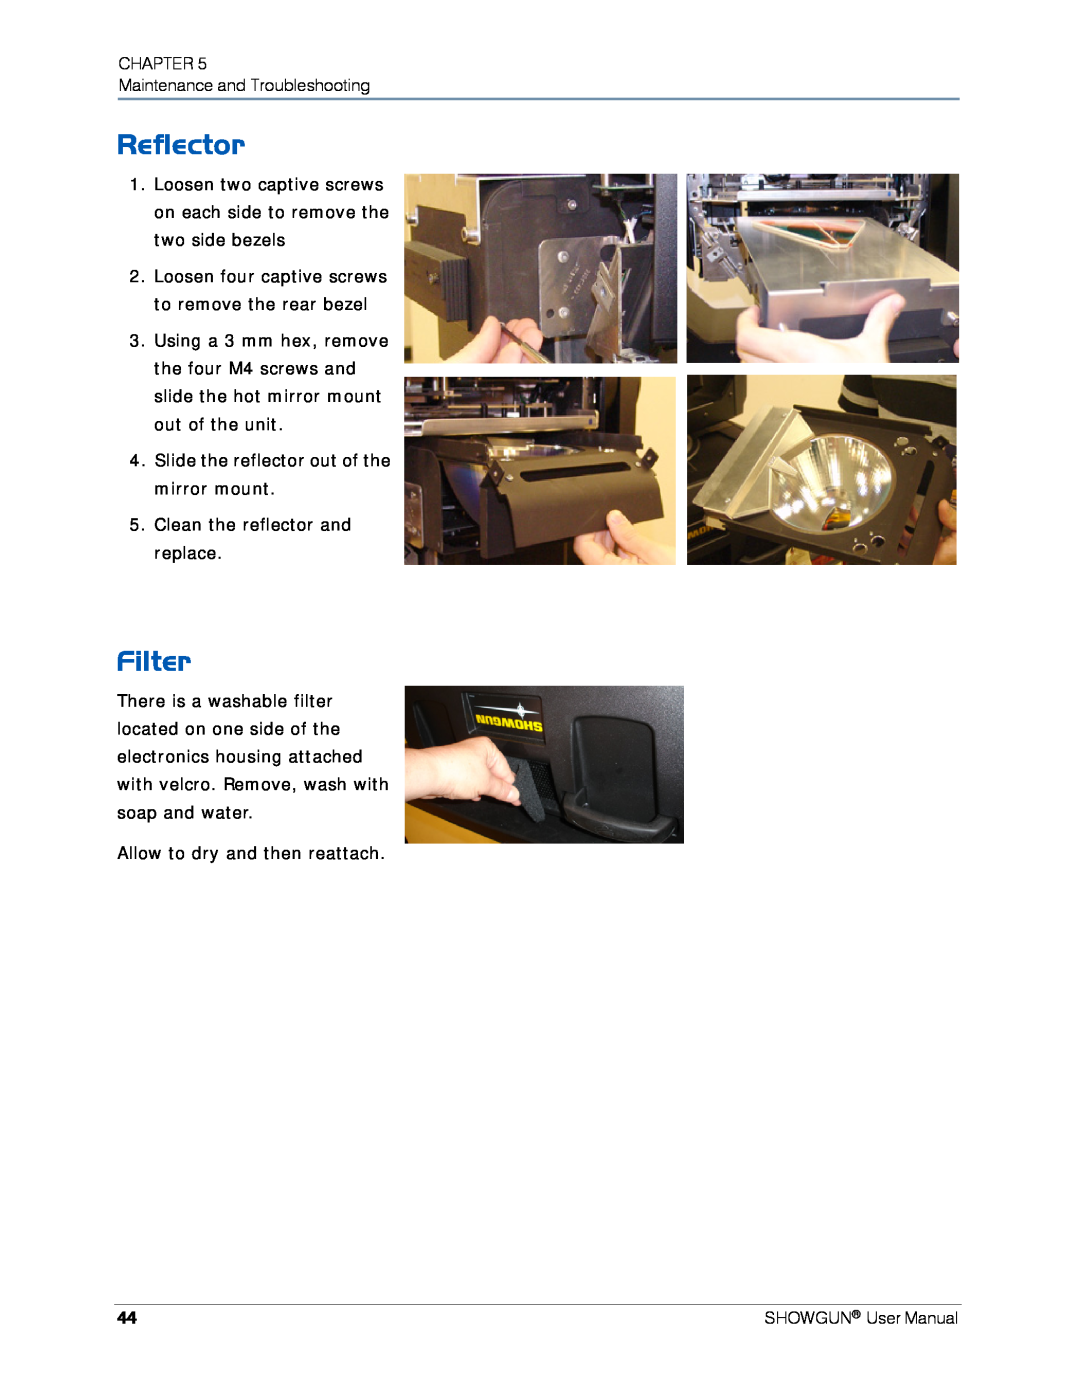 High End Systems SHOWGUN user manual Reflector, Filter 